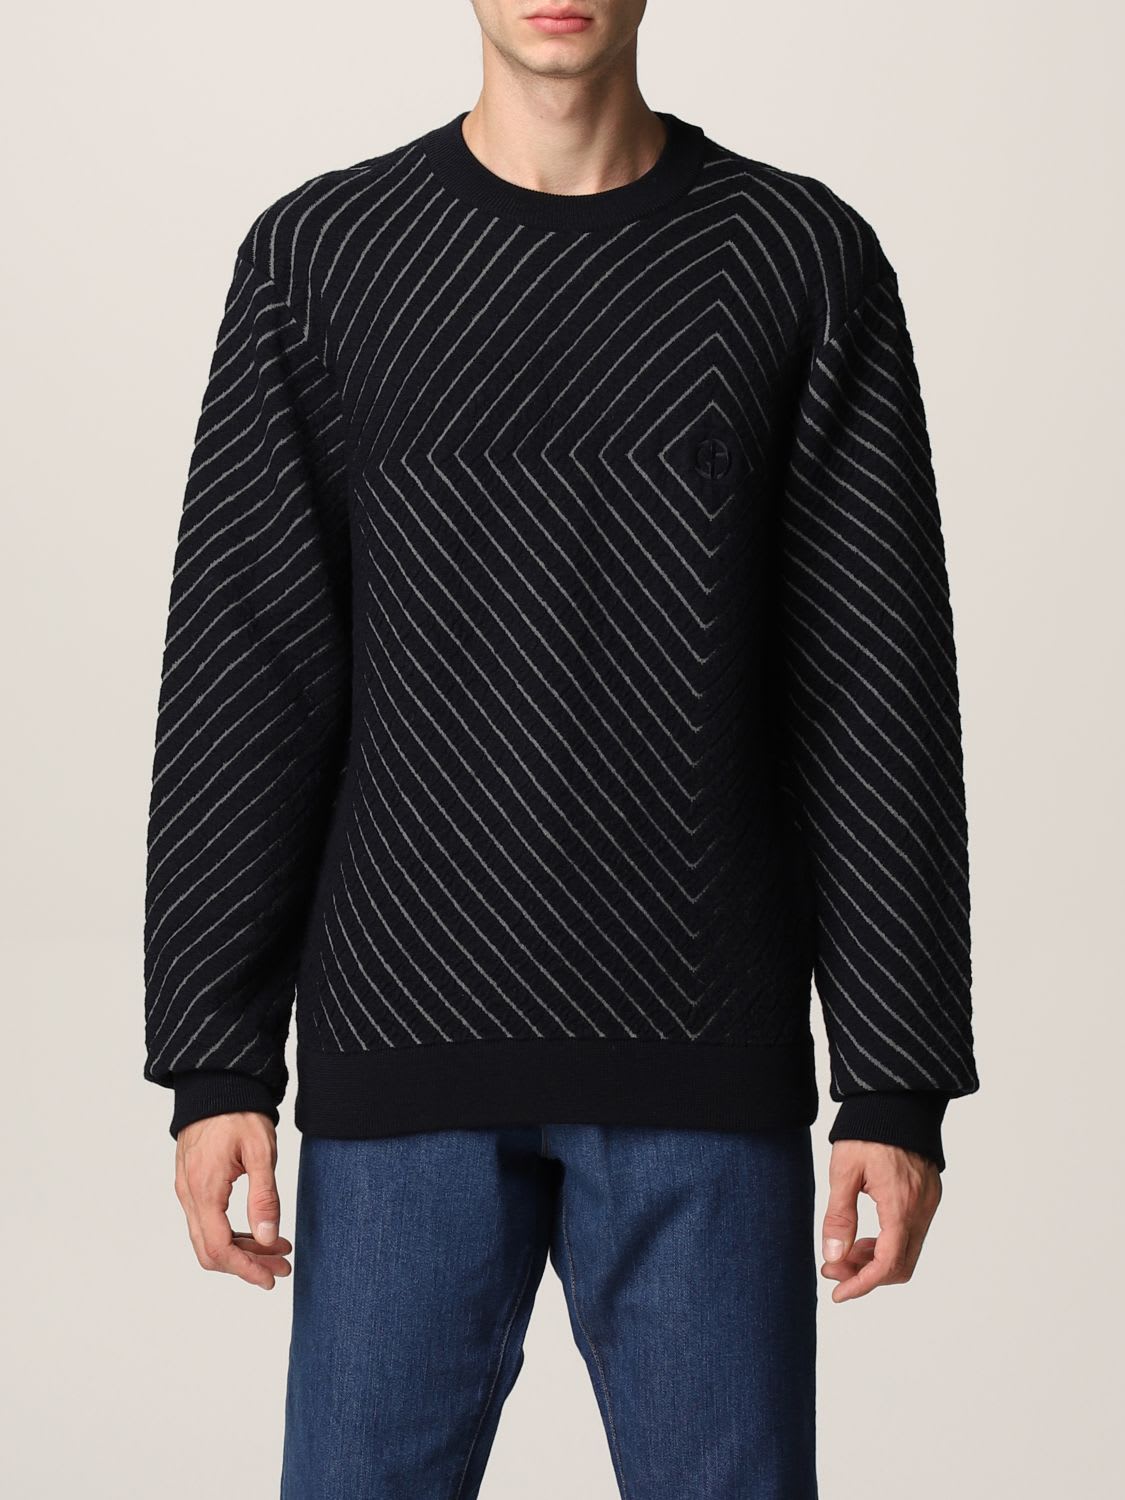 Giorgio Armani sweater Giorgio Armani zigzag jacquard sweater